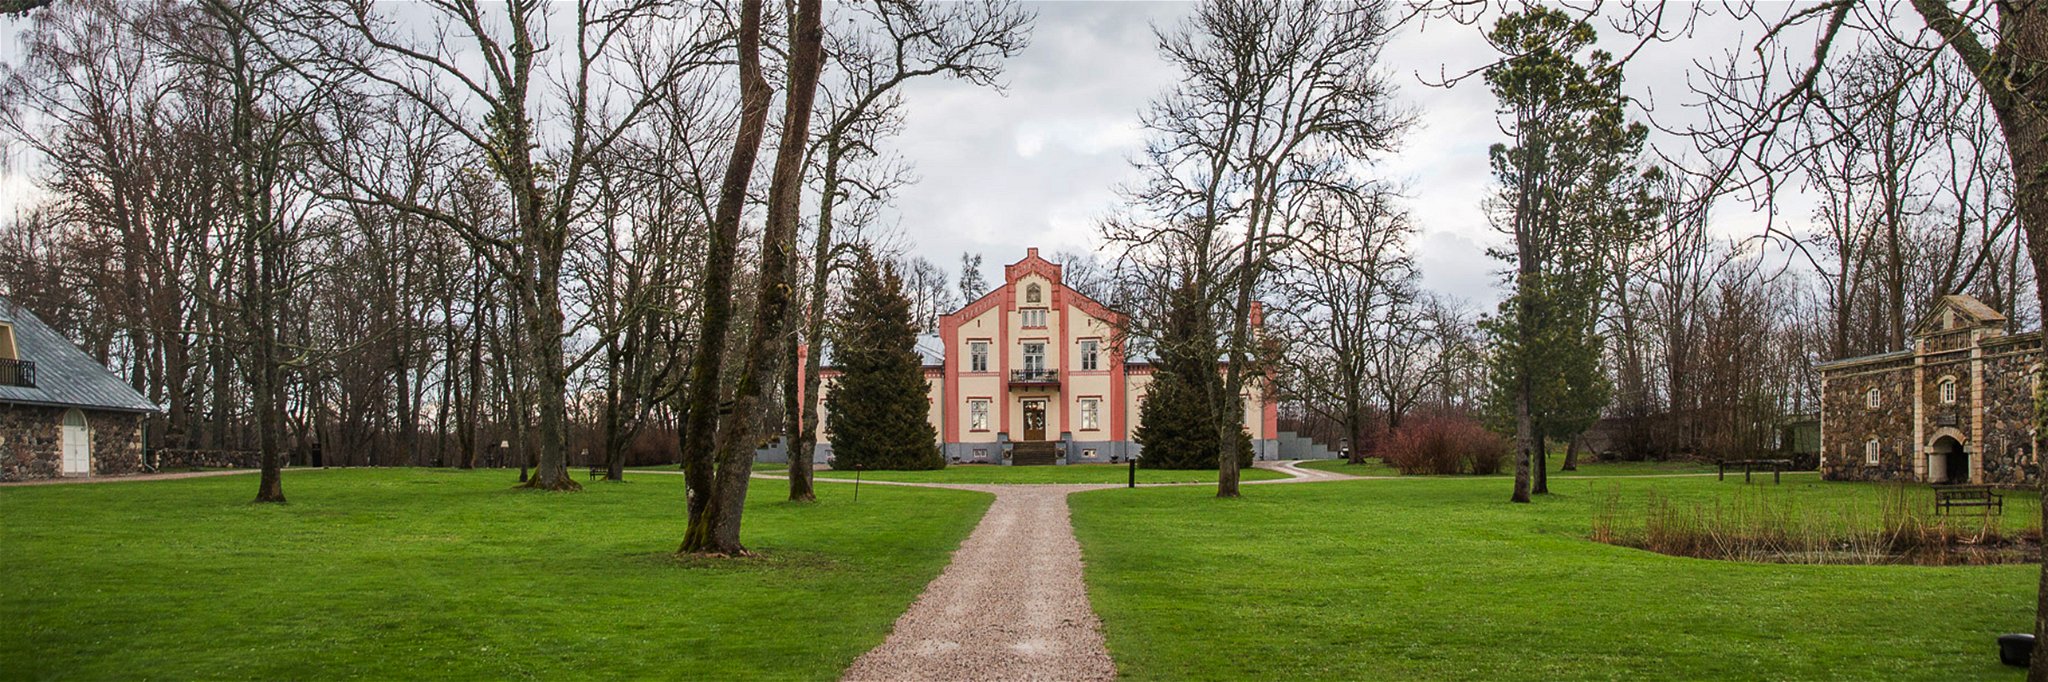 The restored Pädaste Manor